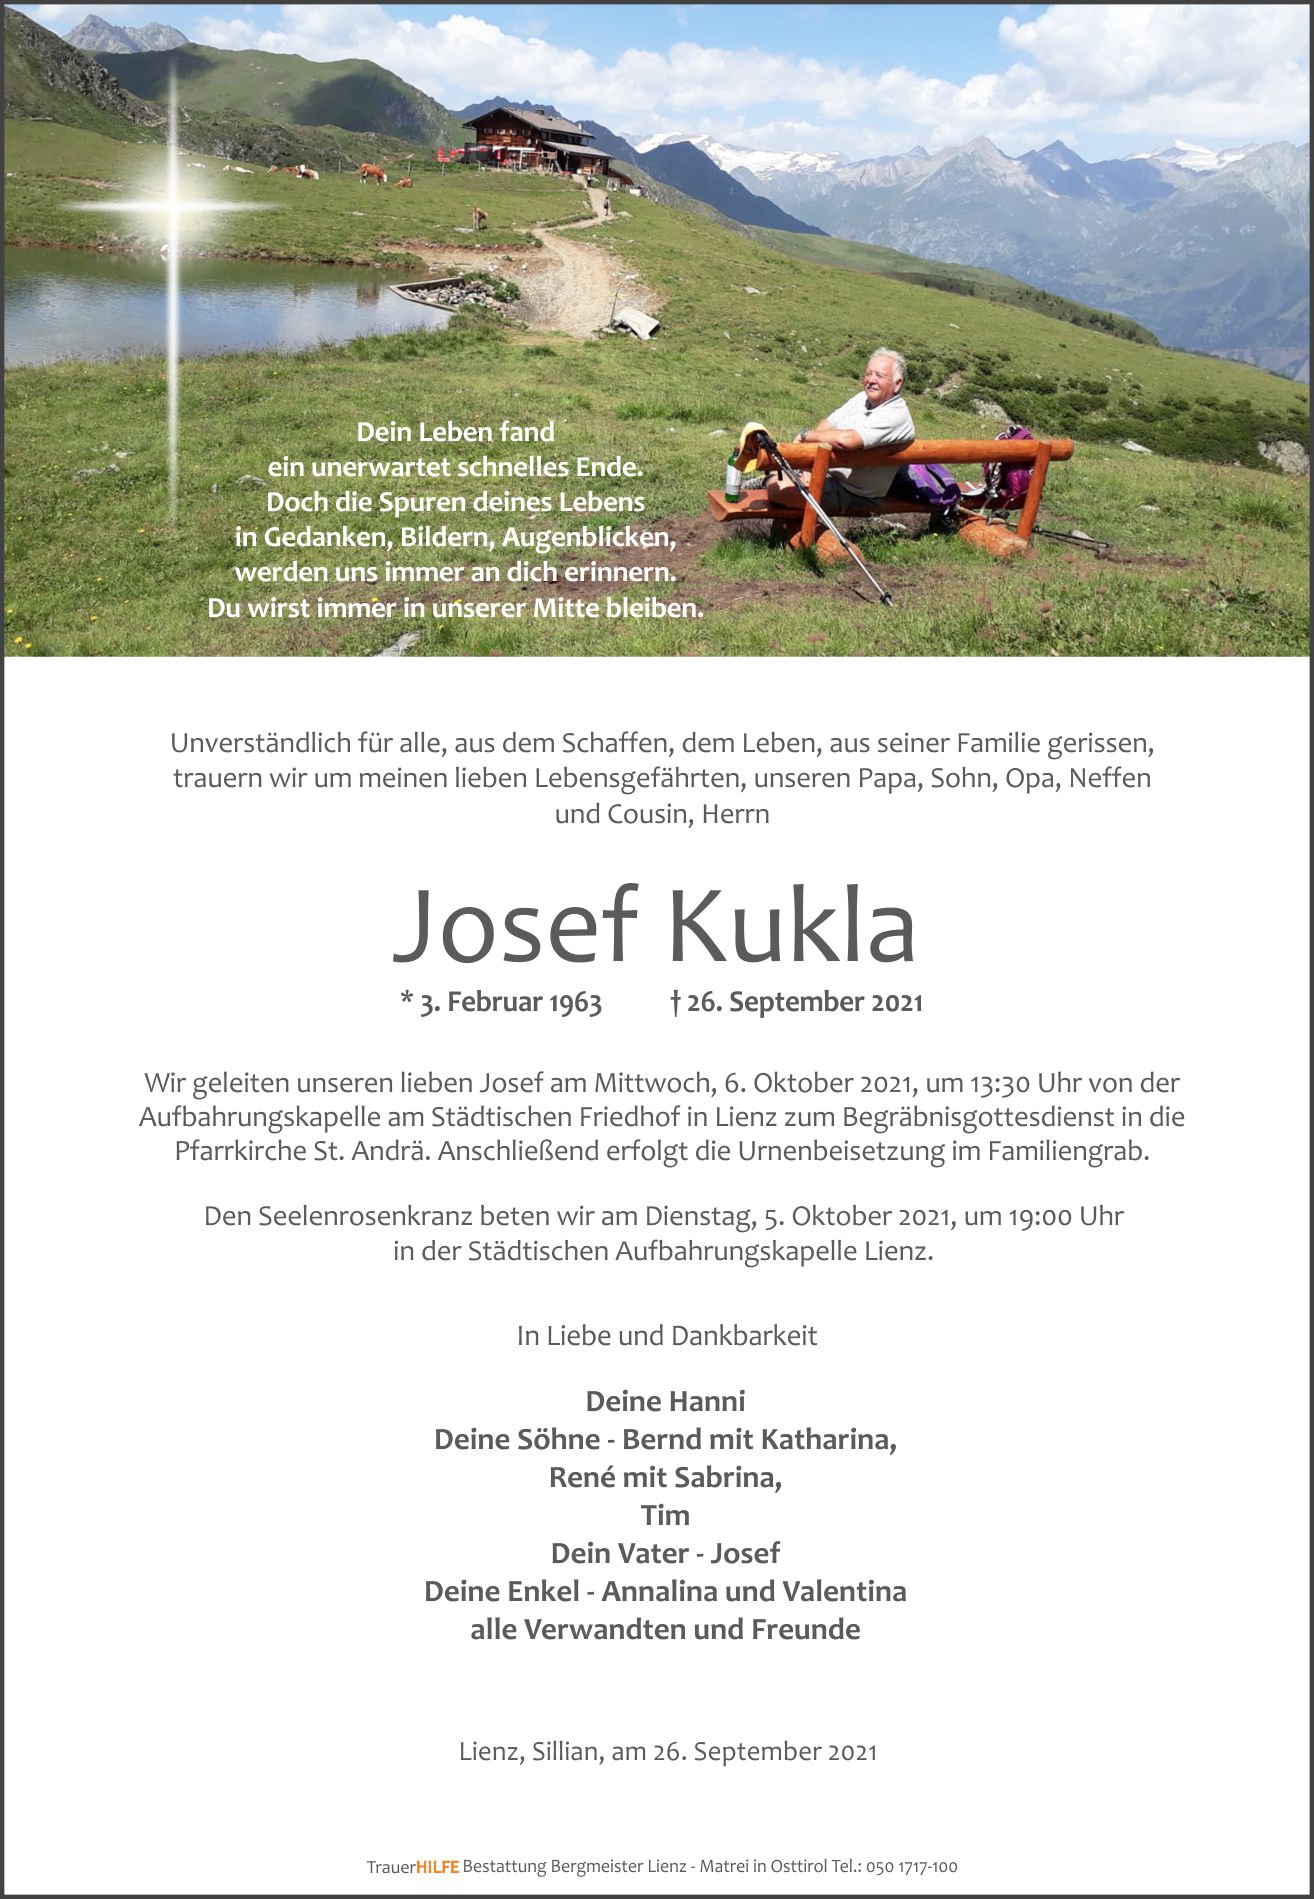 Josef Kukla